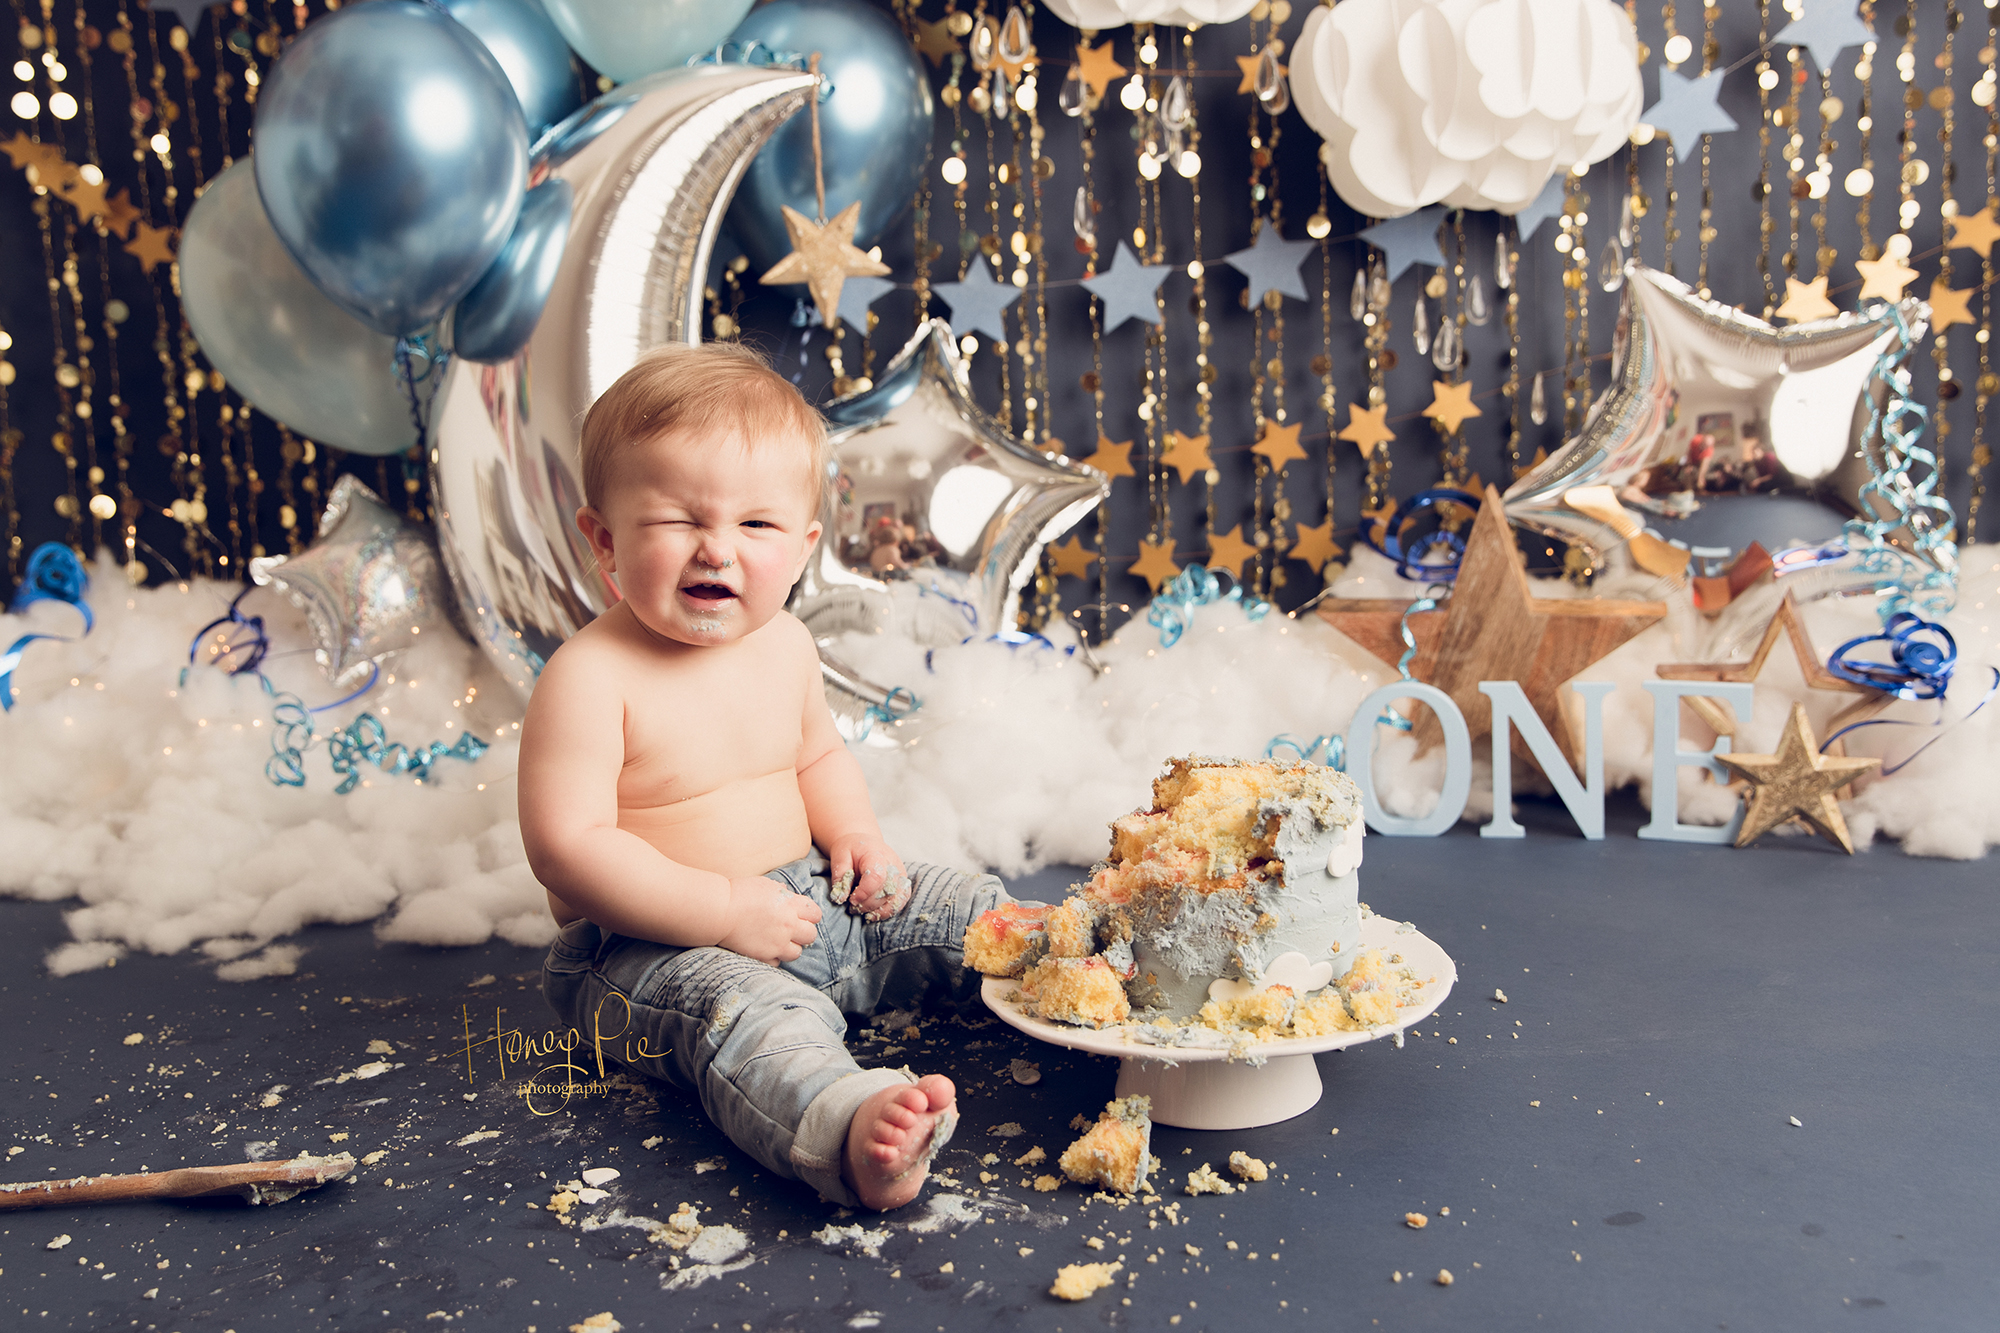 When the sugar hits, baby boy enjoying his birthday cake during photoshoot